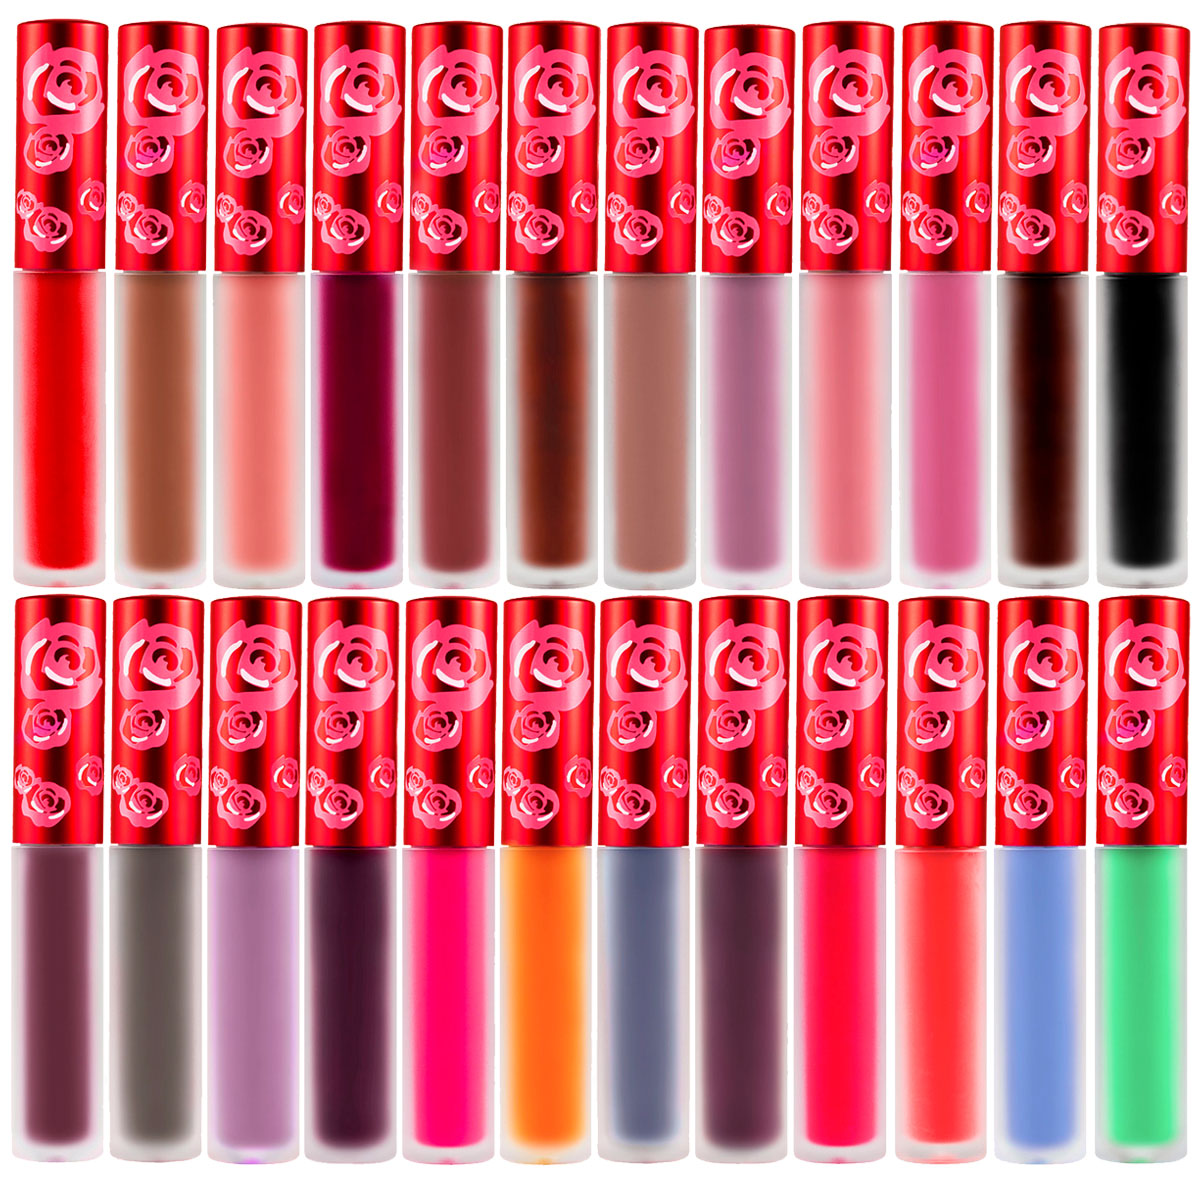 LIME CRIME Velvetines Liquid Lipstick Matte Limited Edition